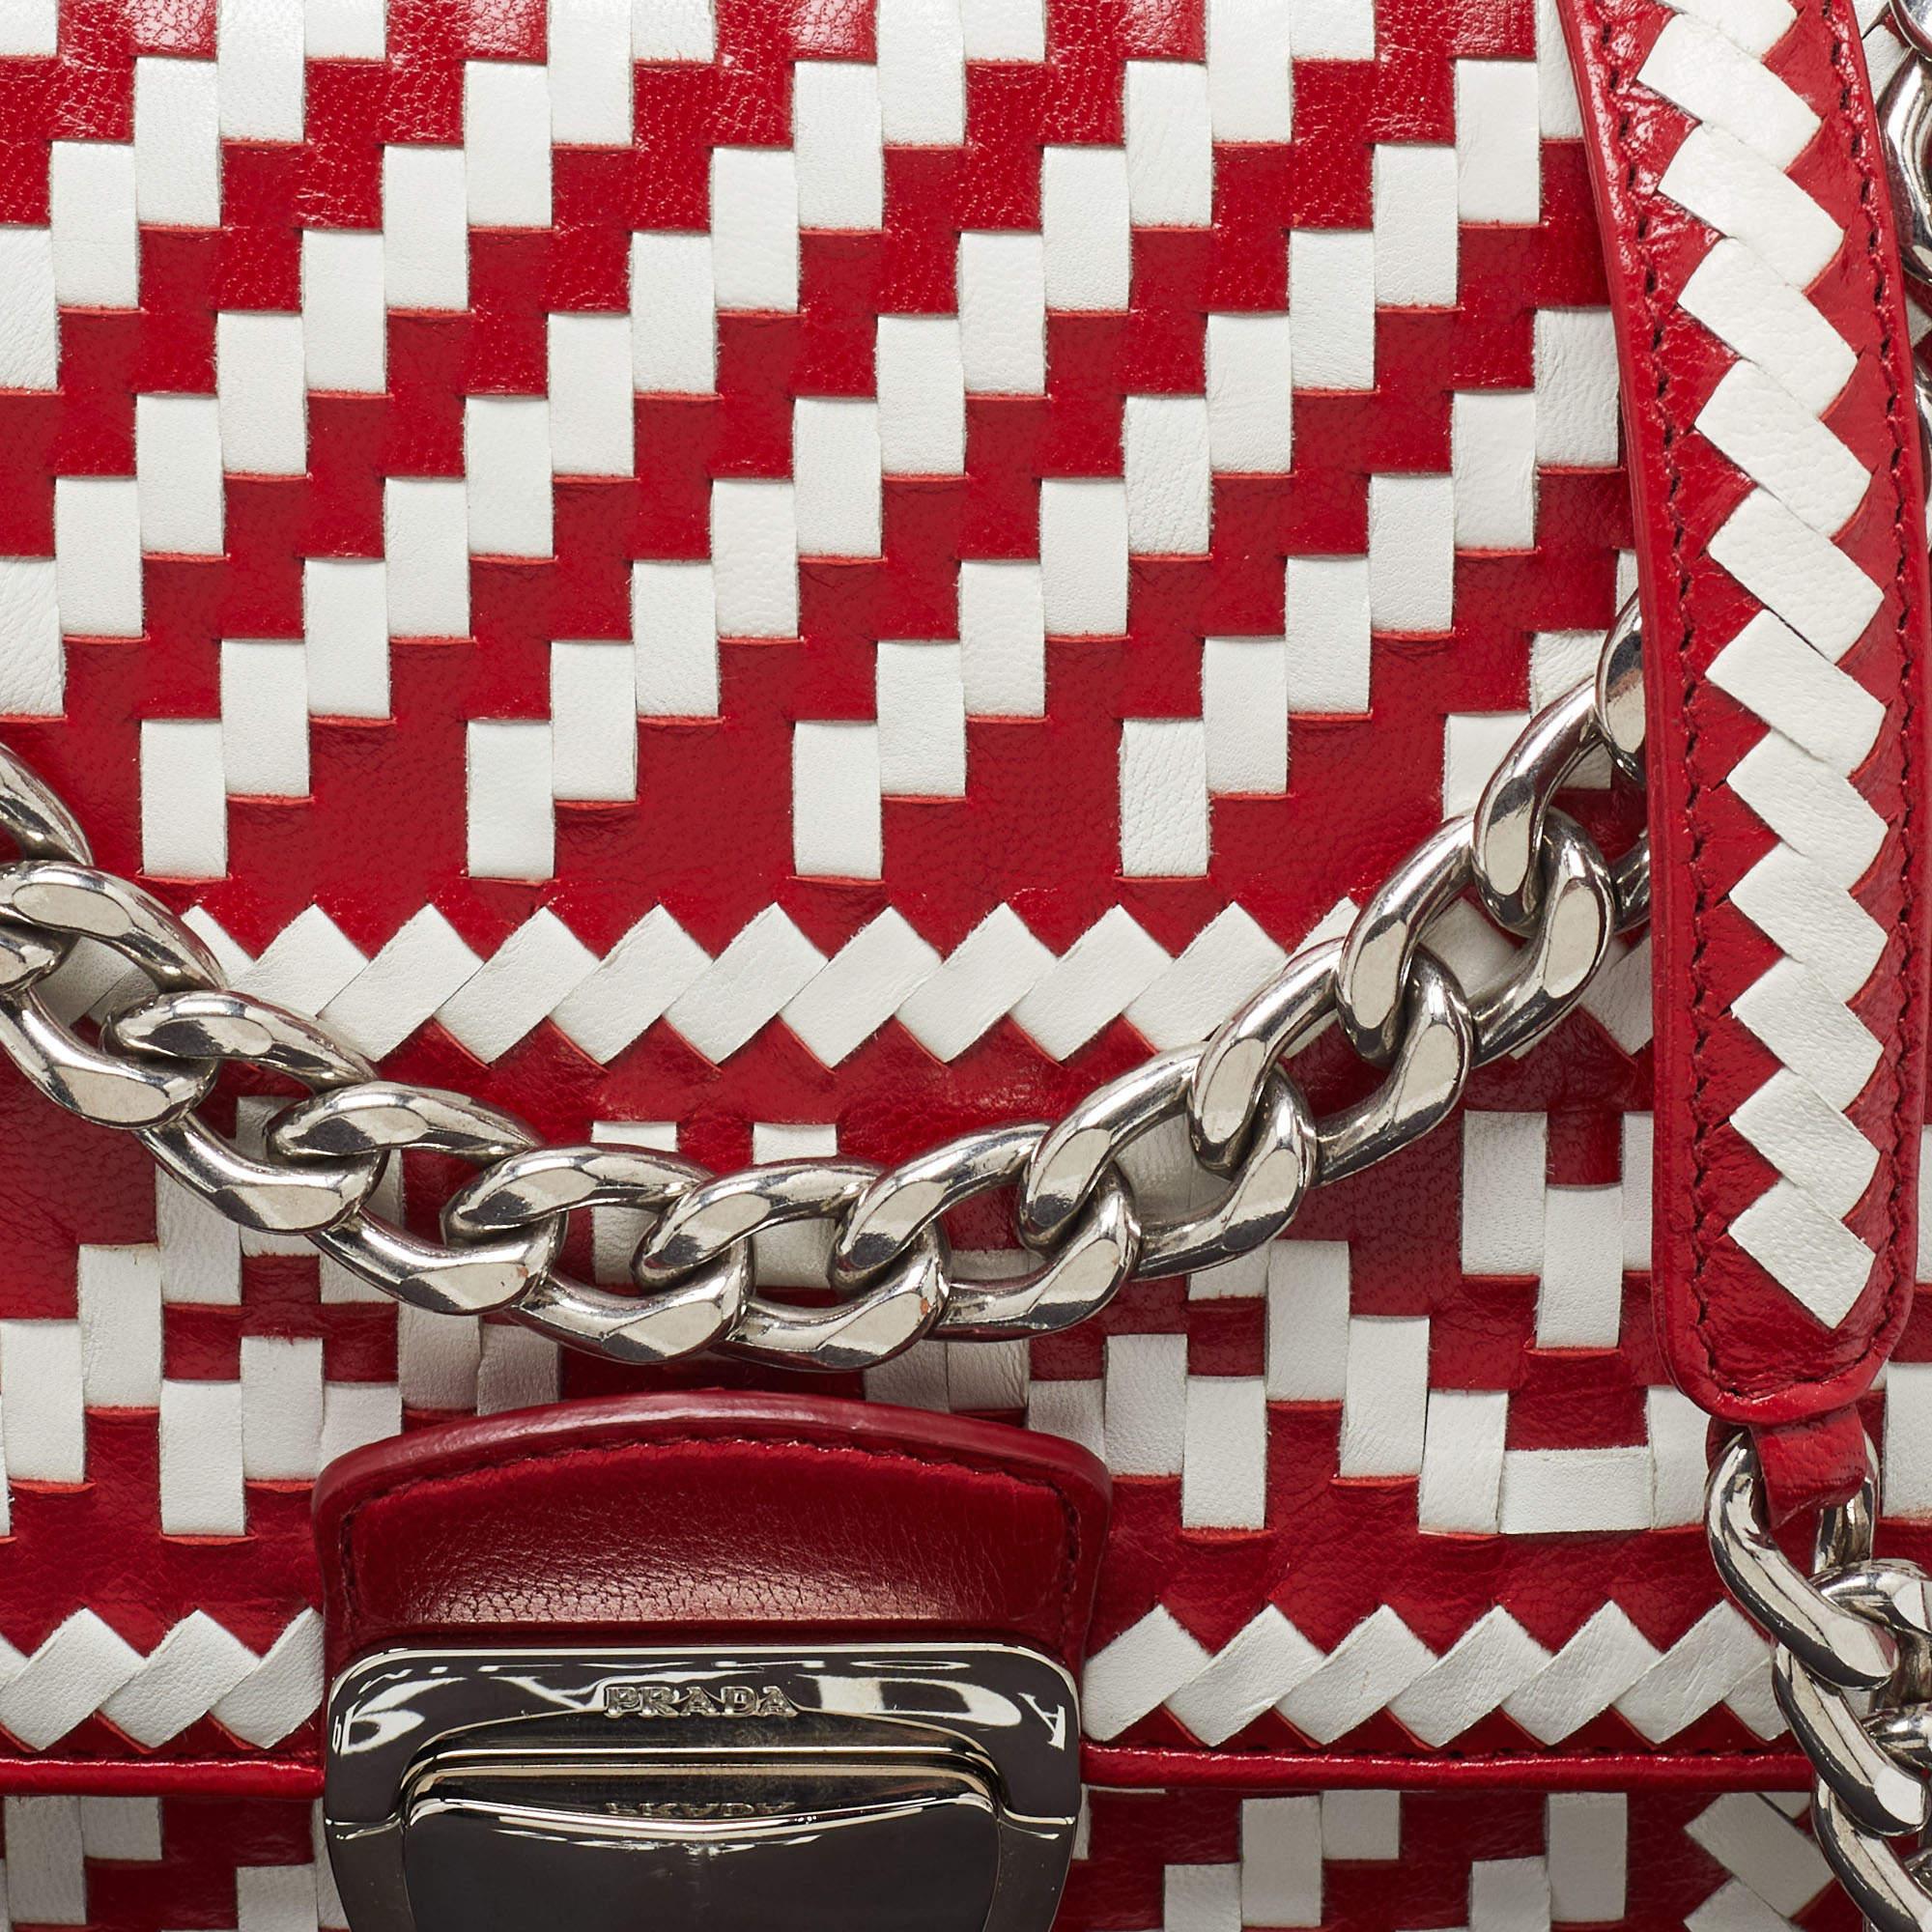 Prada Red/White Madras Woven Leather Pushlock Flap Bag 8